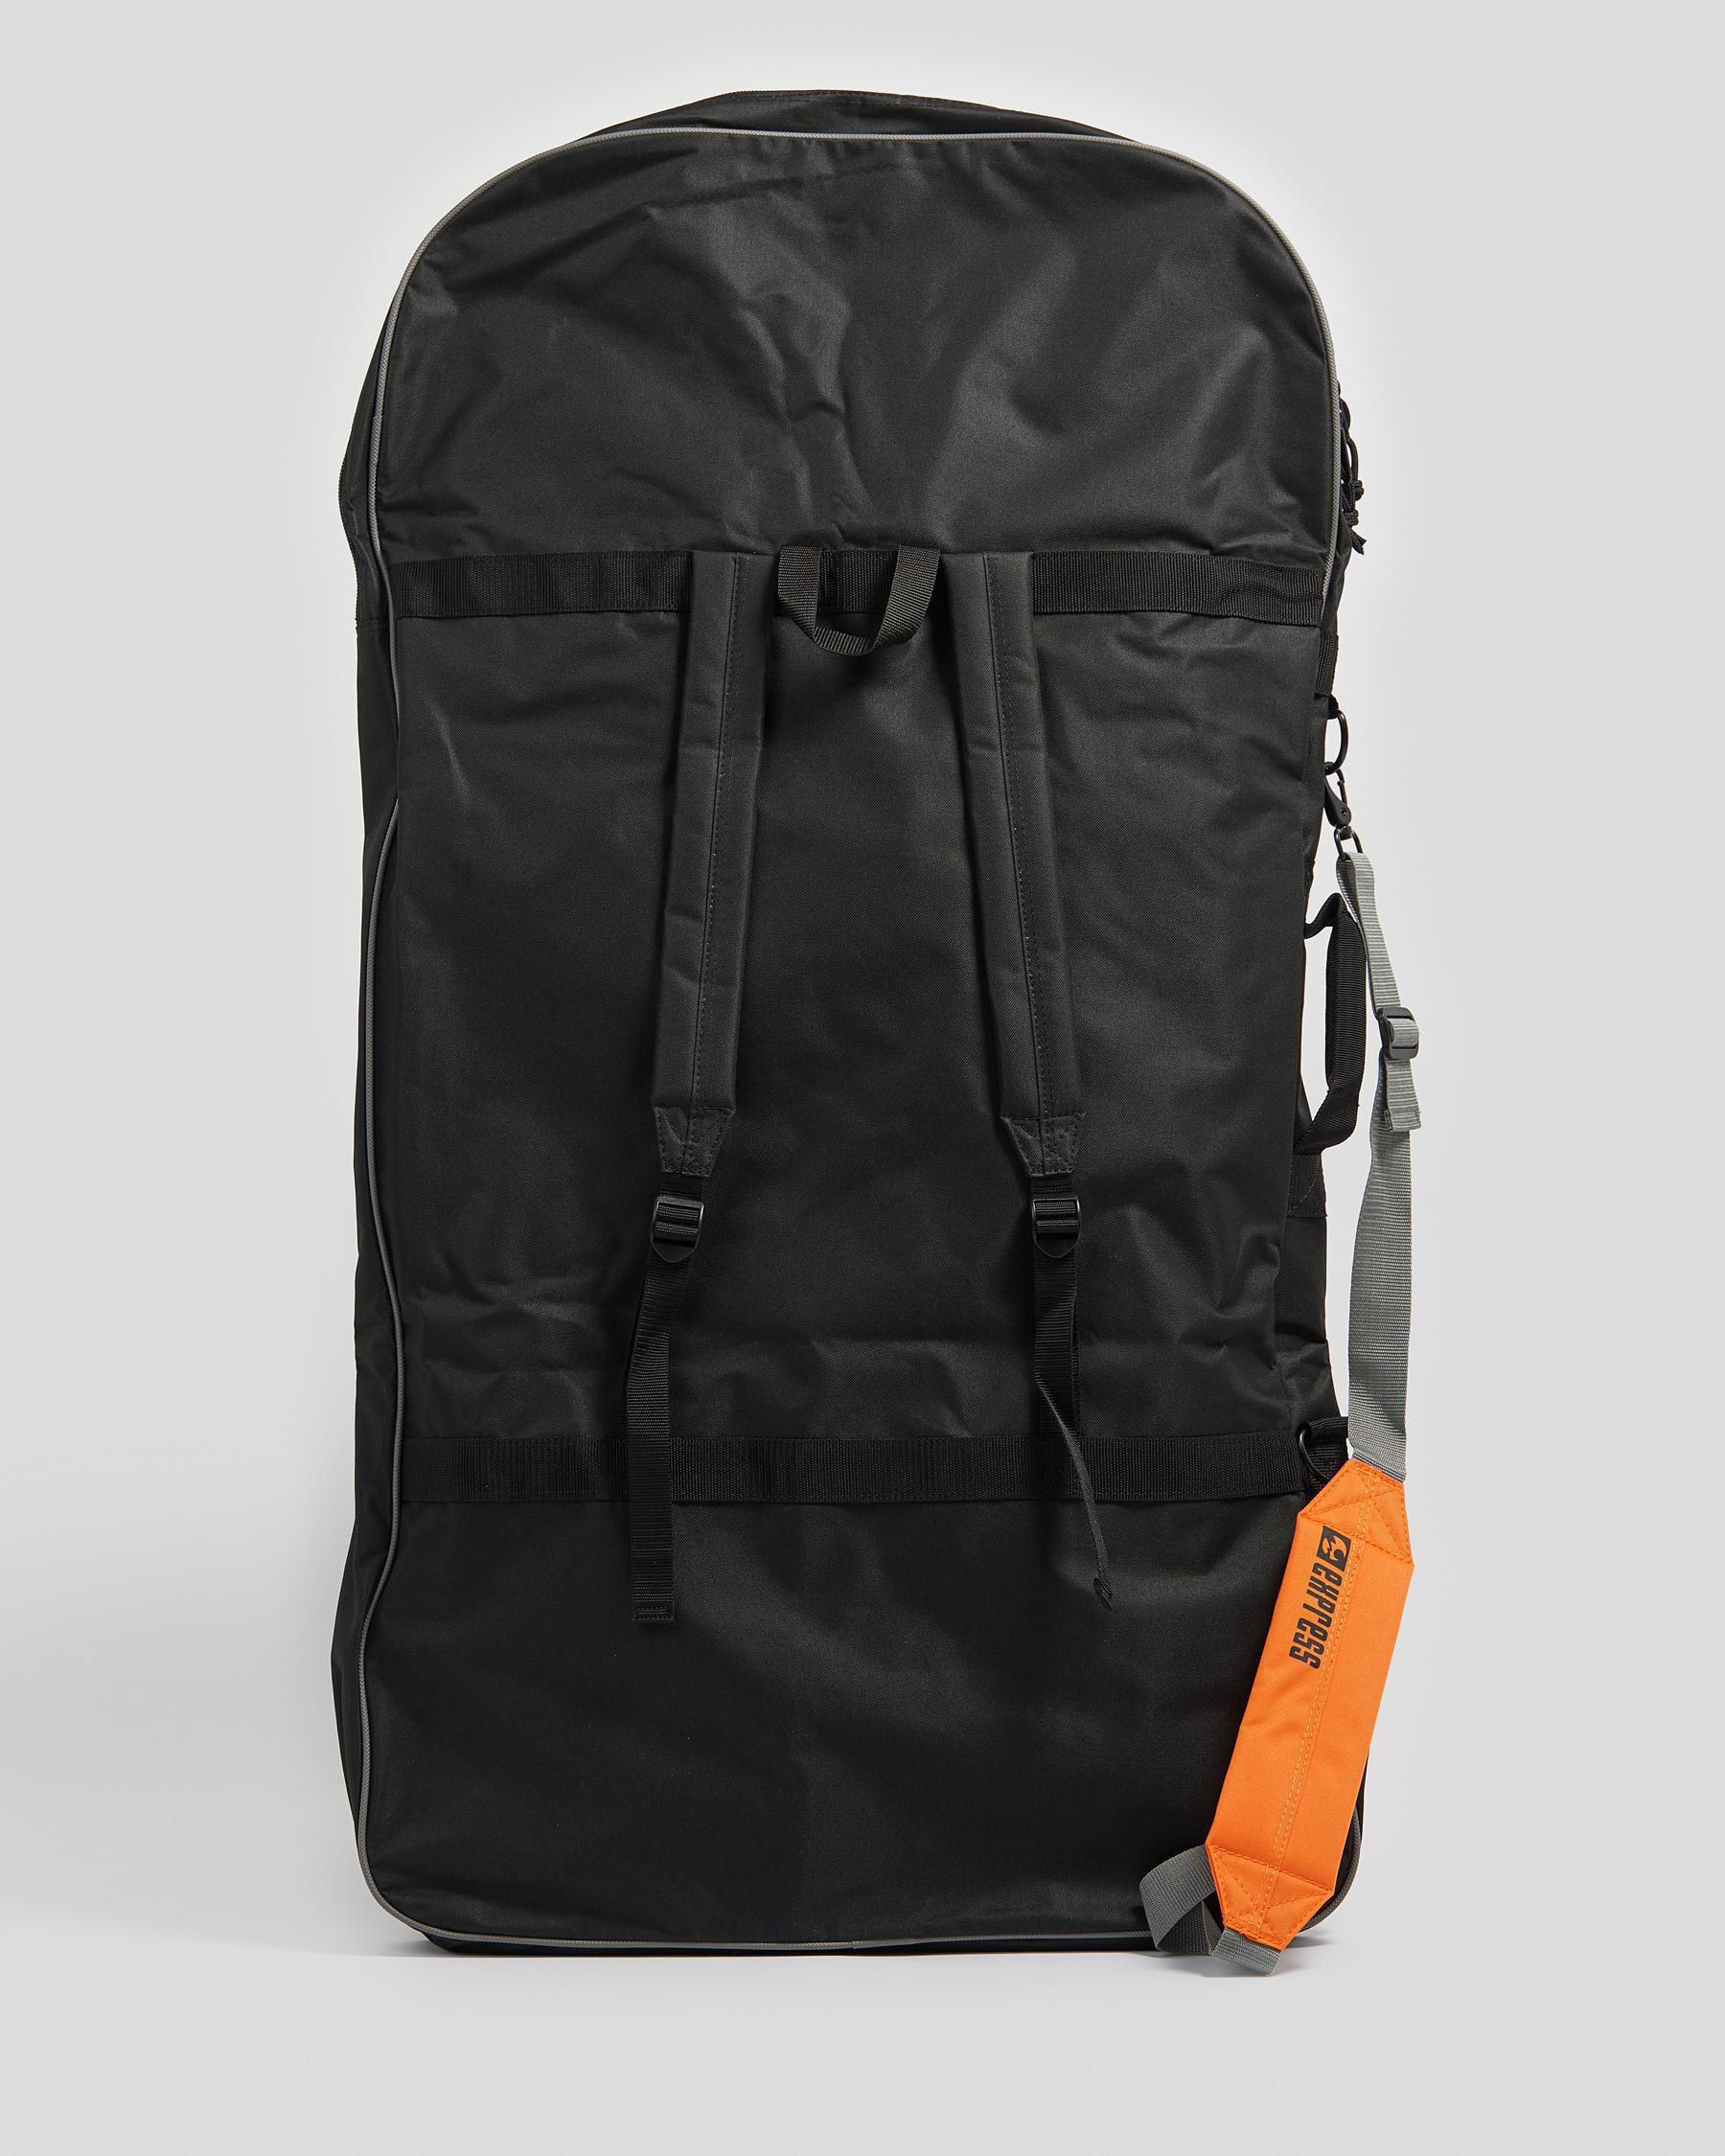 Balin Deluxe Double Bodyboard Bag In Orange/black | City Beach United ...